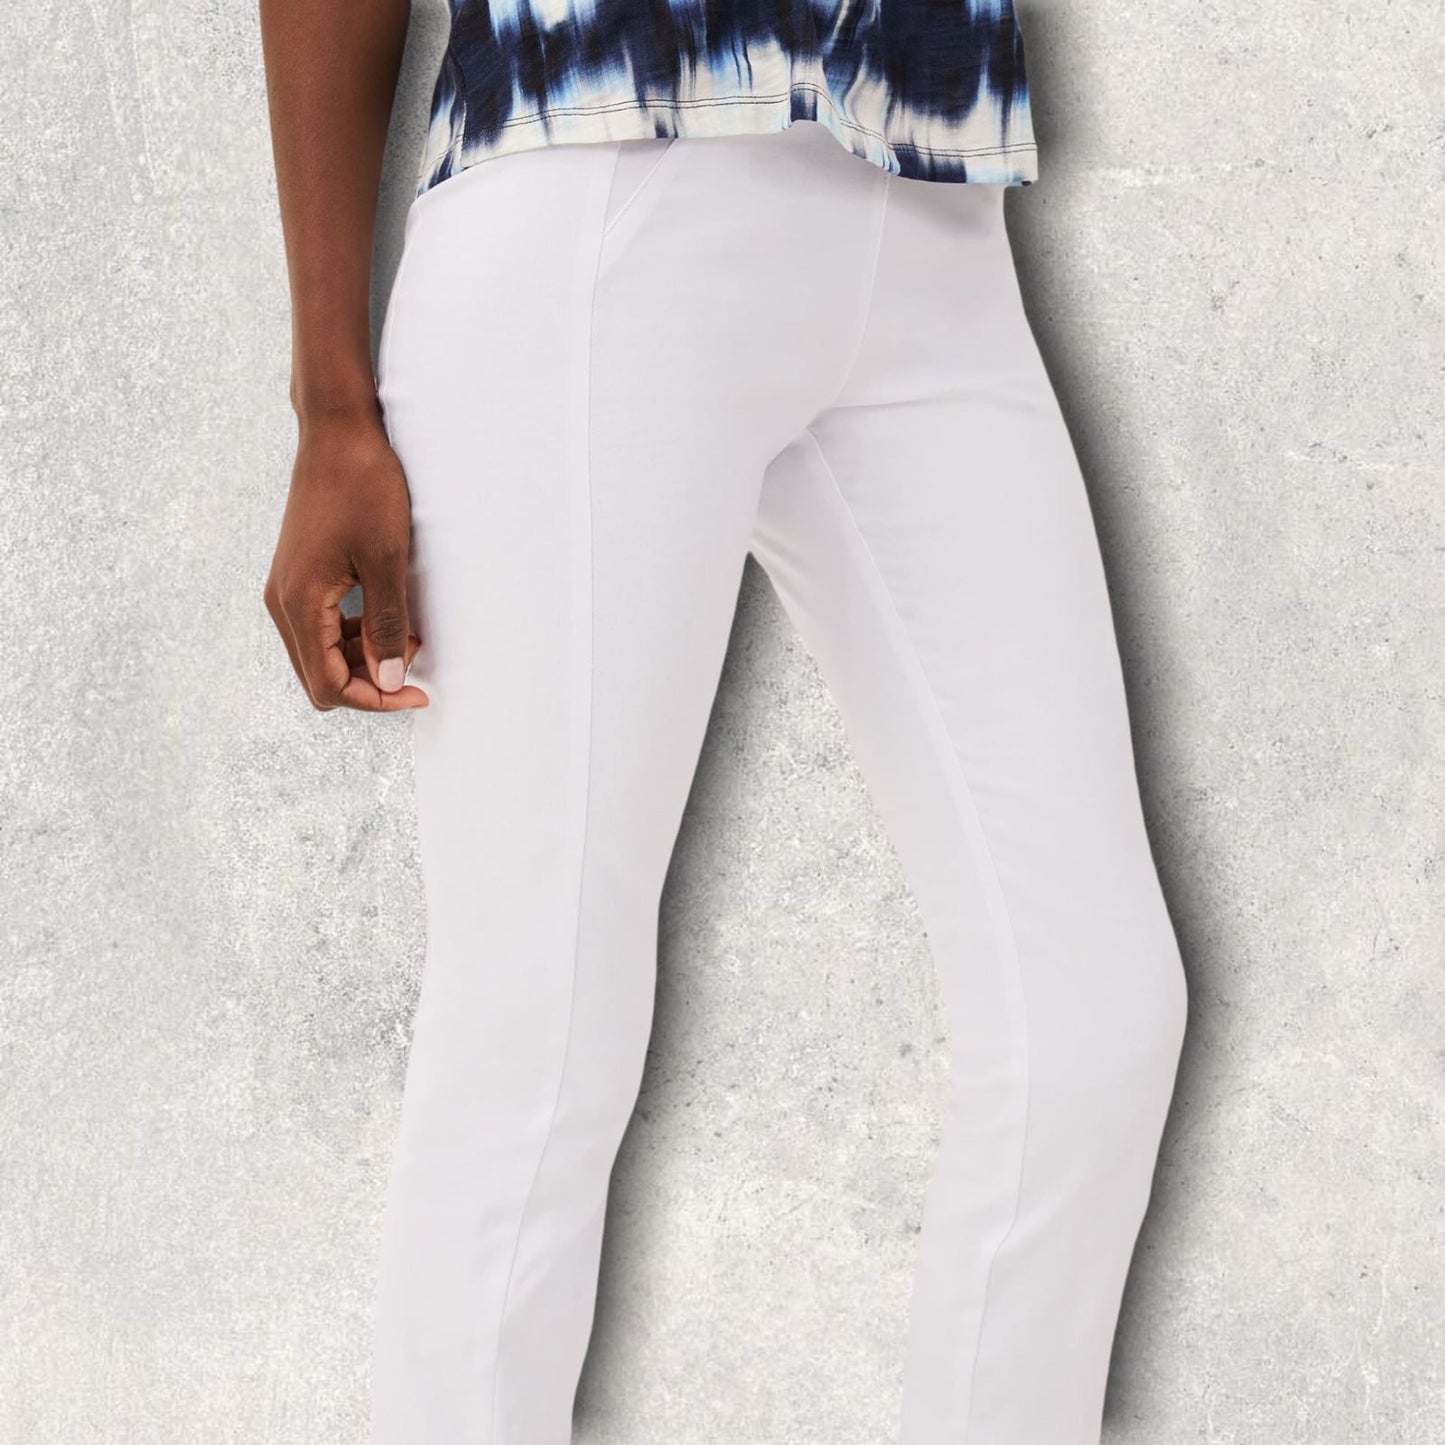 Libra White Cotton Summer Cropped Trousers UK 16 US 12 EU 44 BNWT RRP £89.95 Timeless Fashions